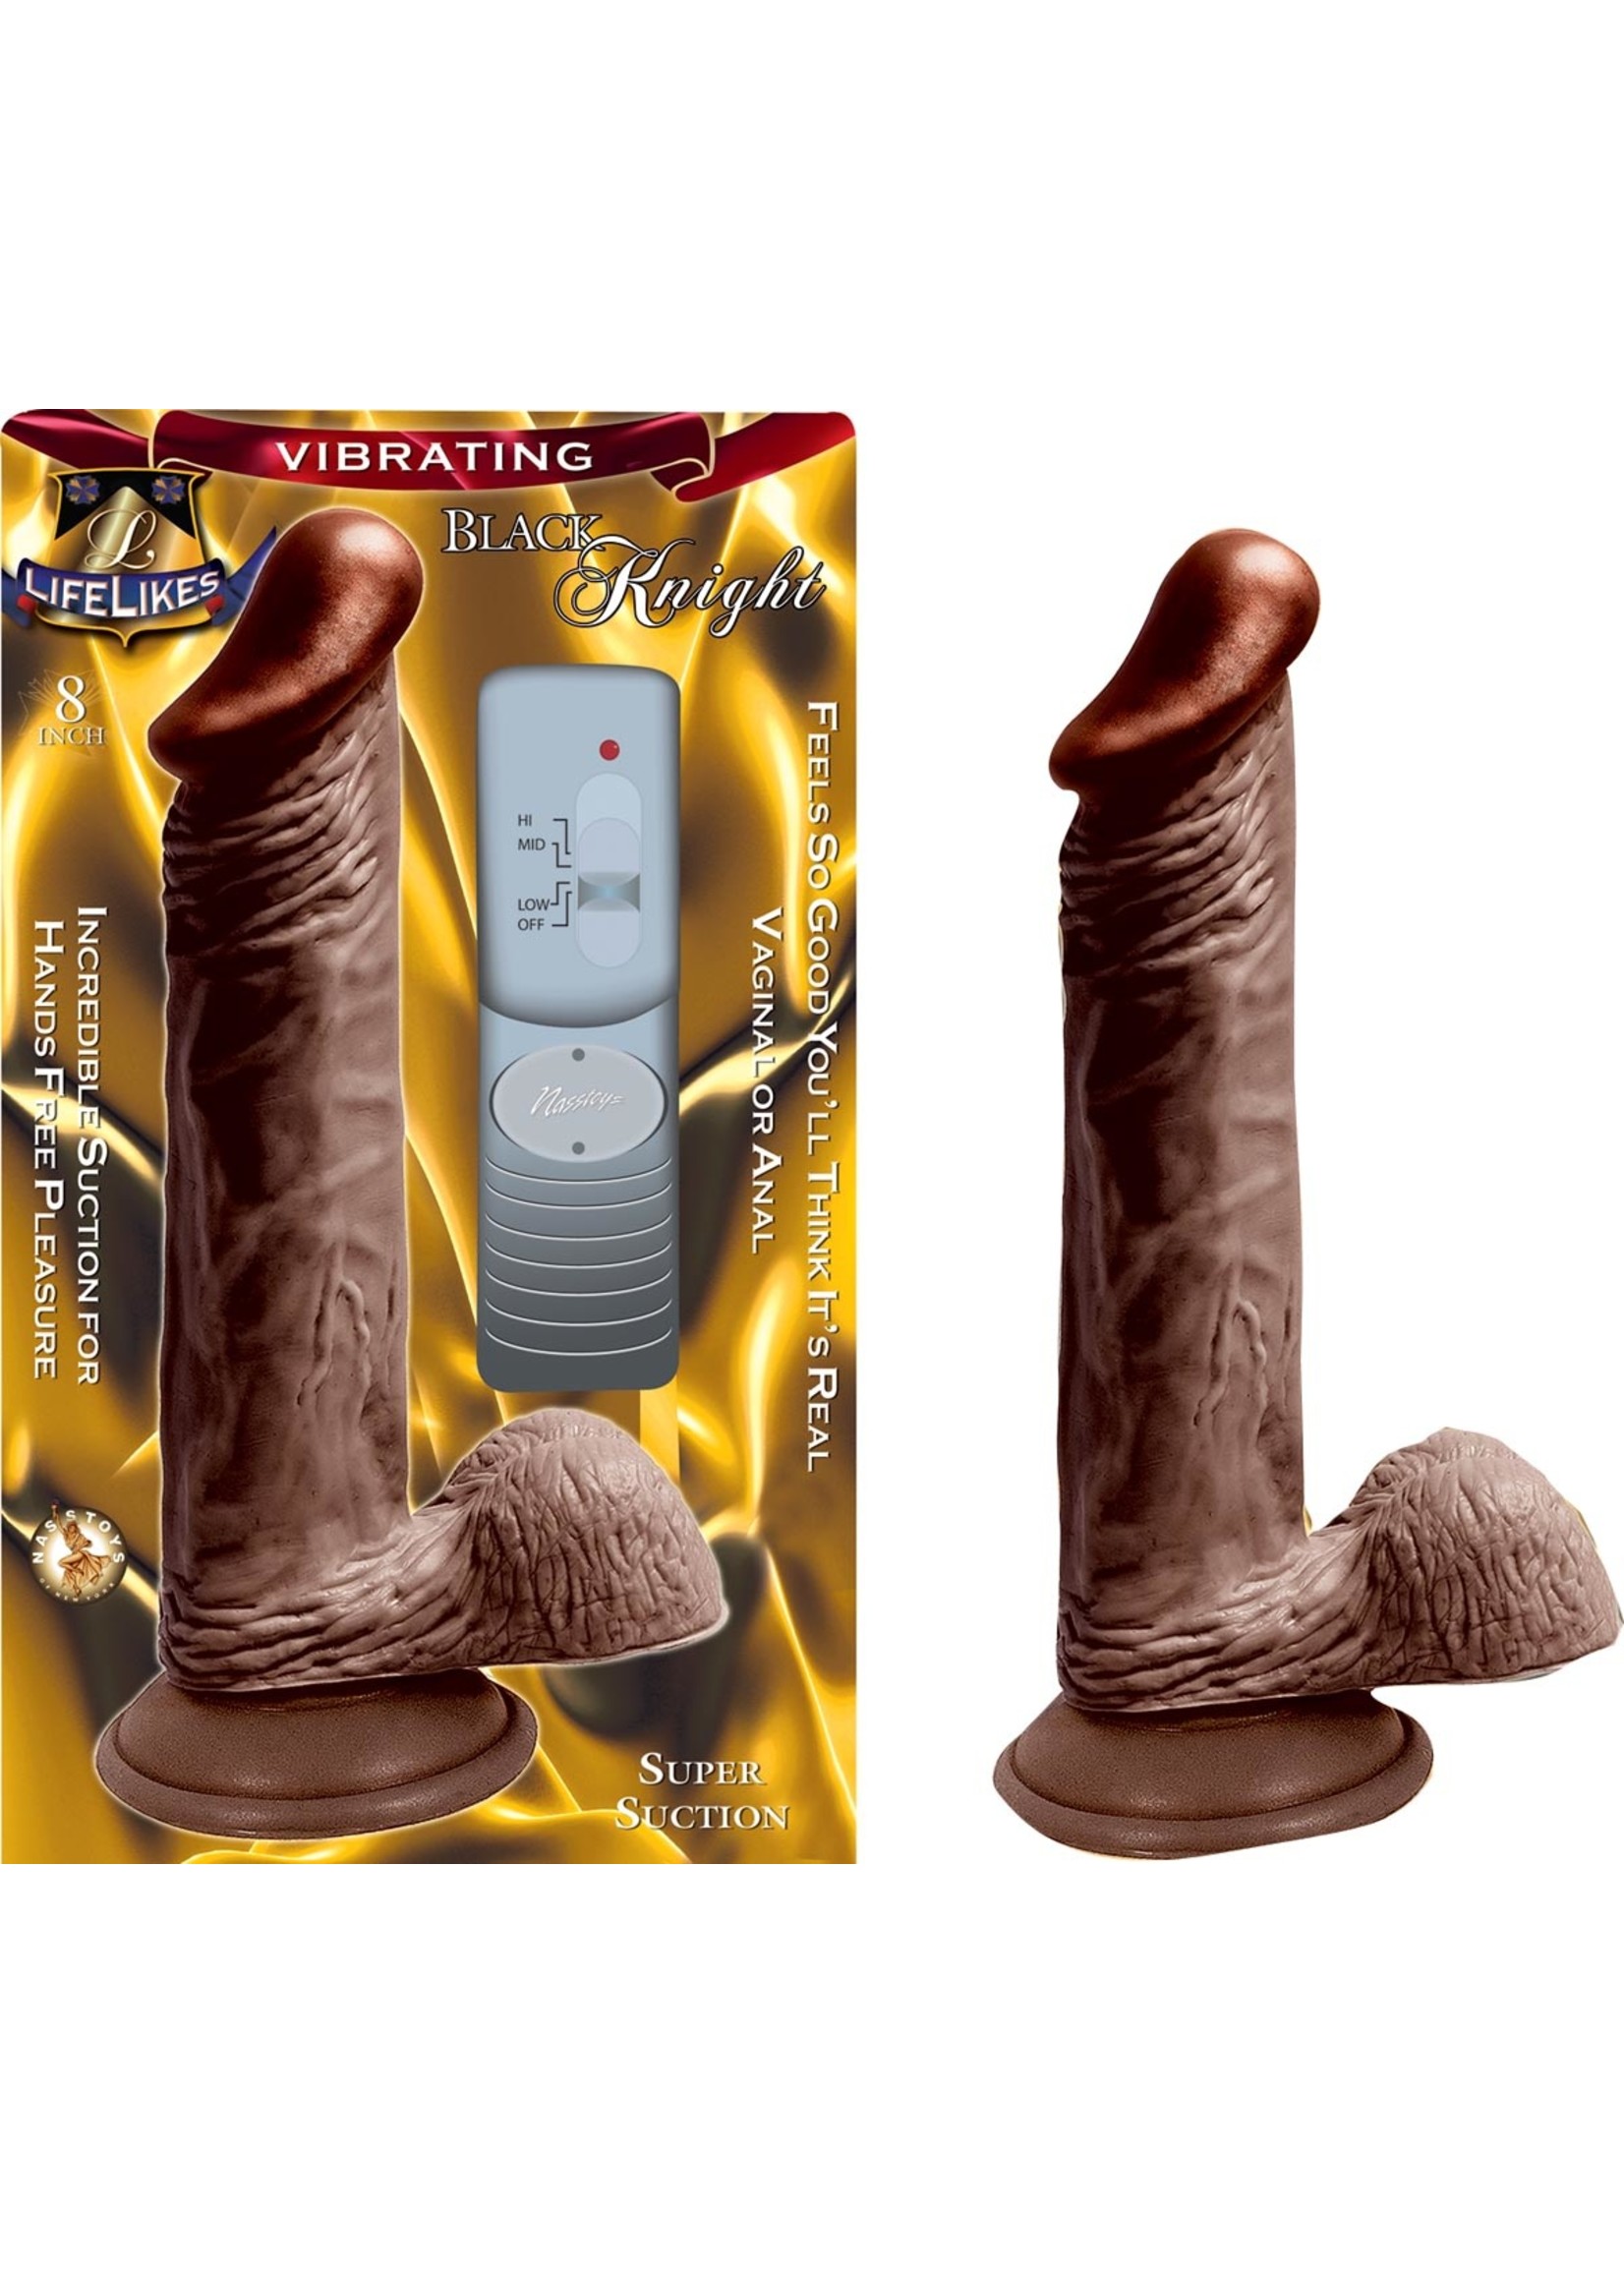 Nasstoys Lifelikes Vibrating Black Knight Dildo 8in - Chocolate